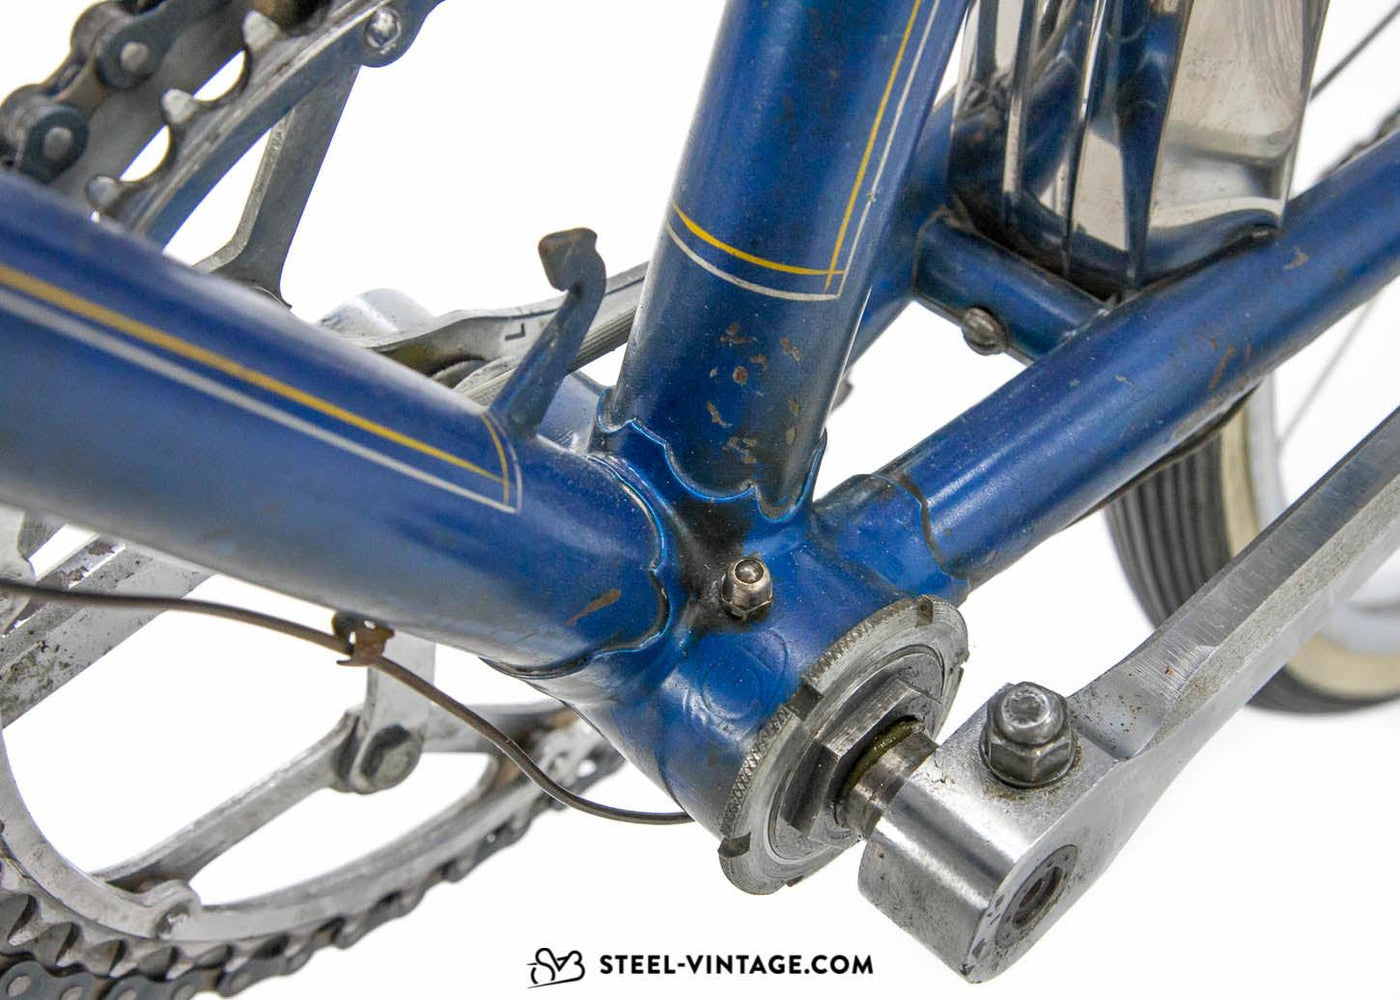 Peugeot PLX8 Randonneur Bike 1956 - Steel Vintage Bikes